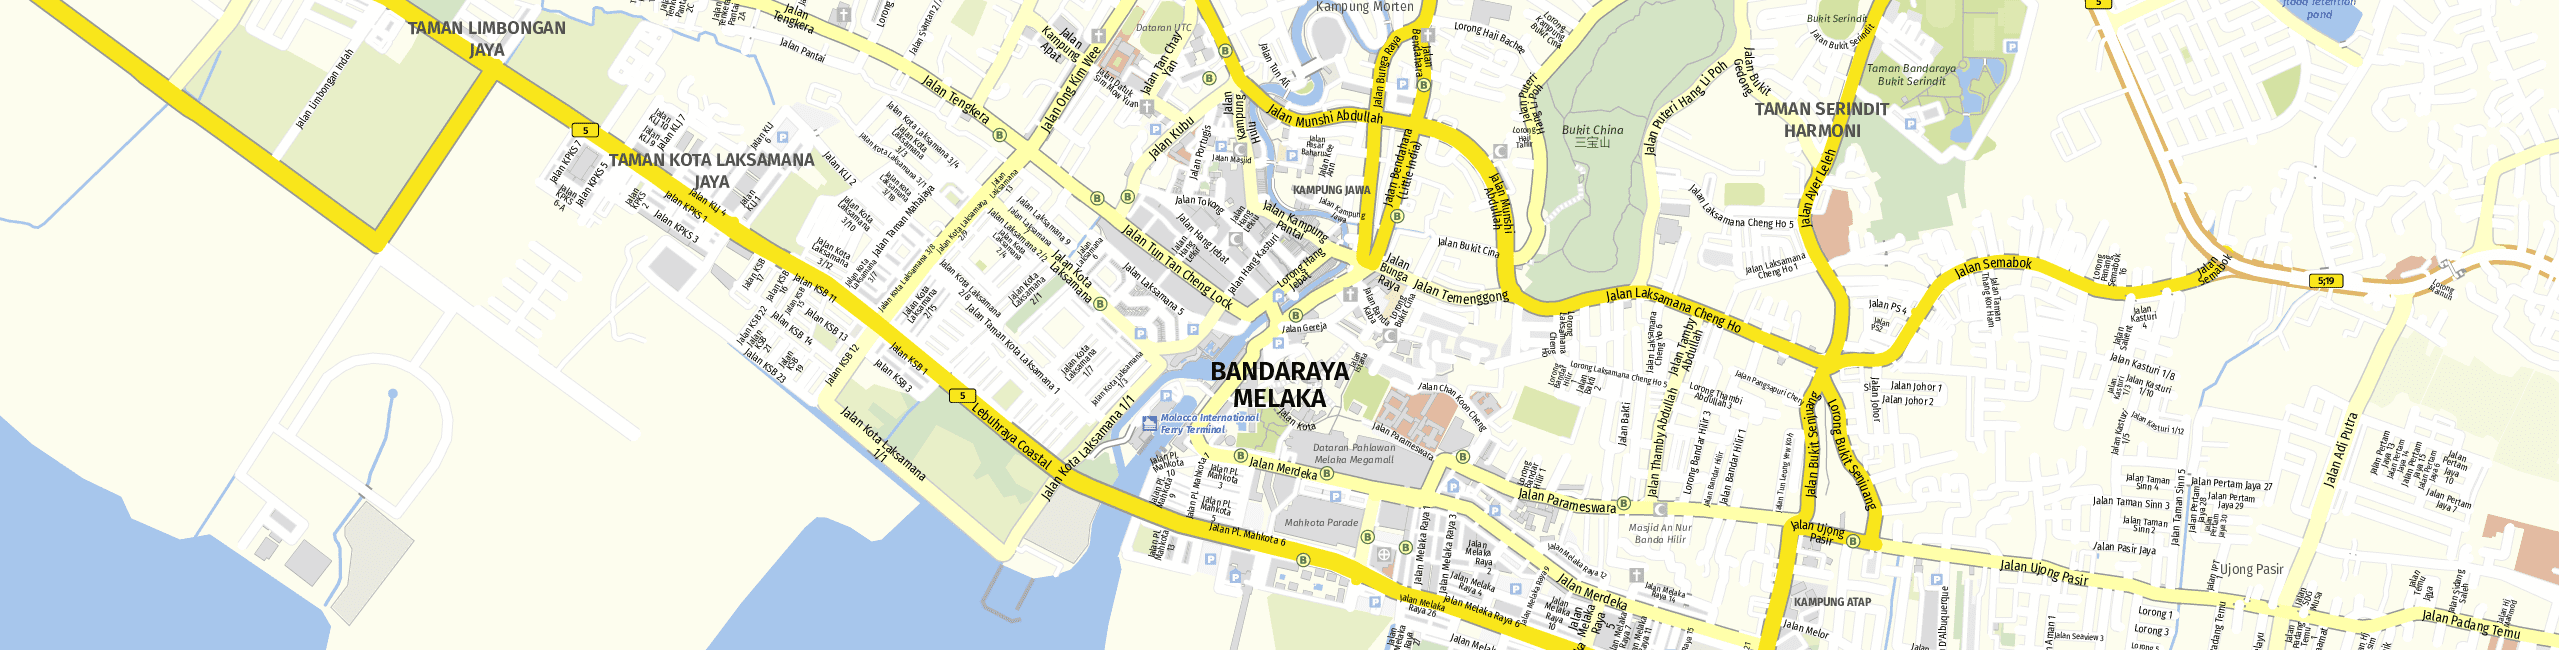 Stadtplan Malacca City zum Downloaden.